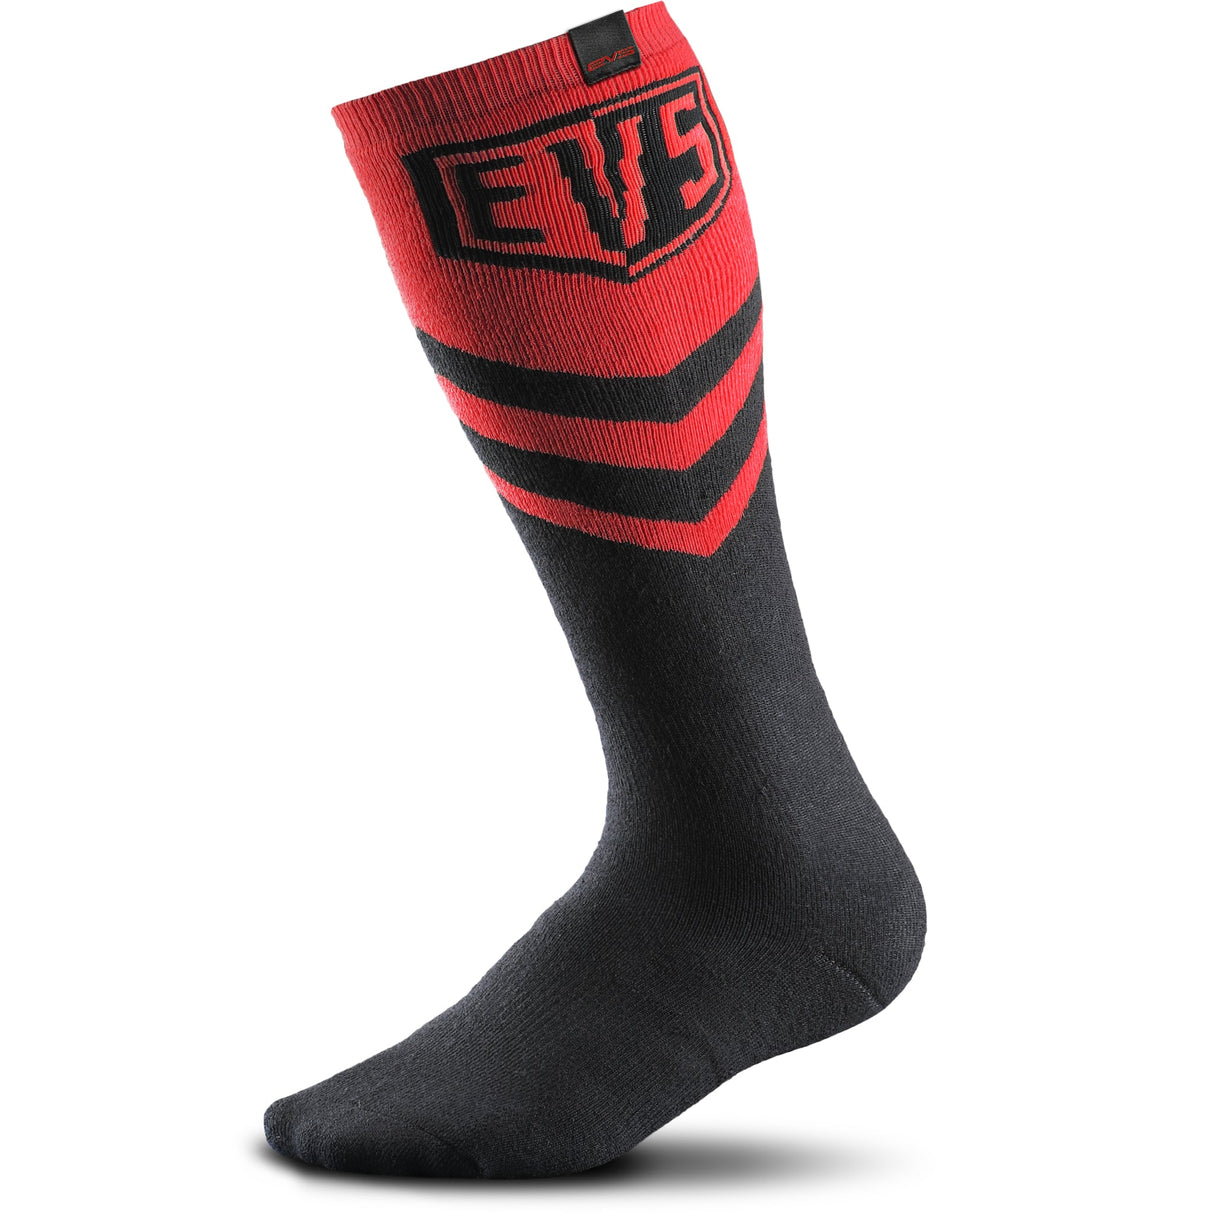 Evs Coolmax Moto Sock - Red